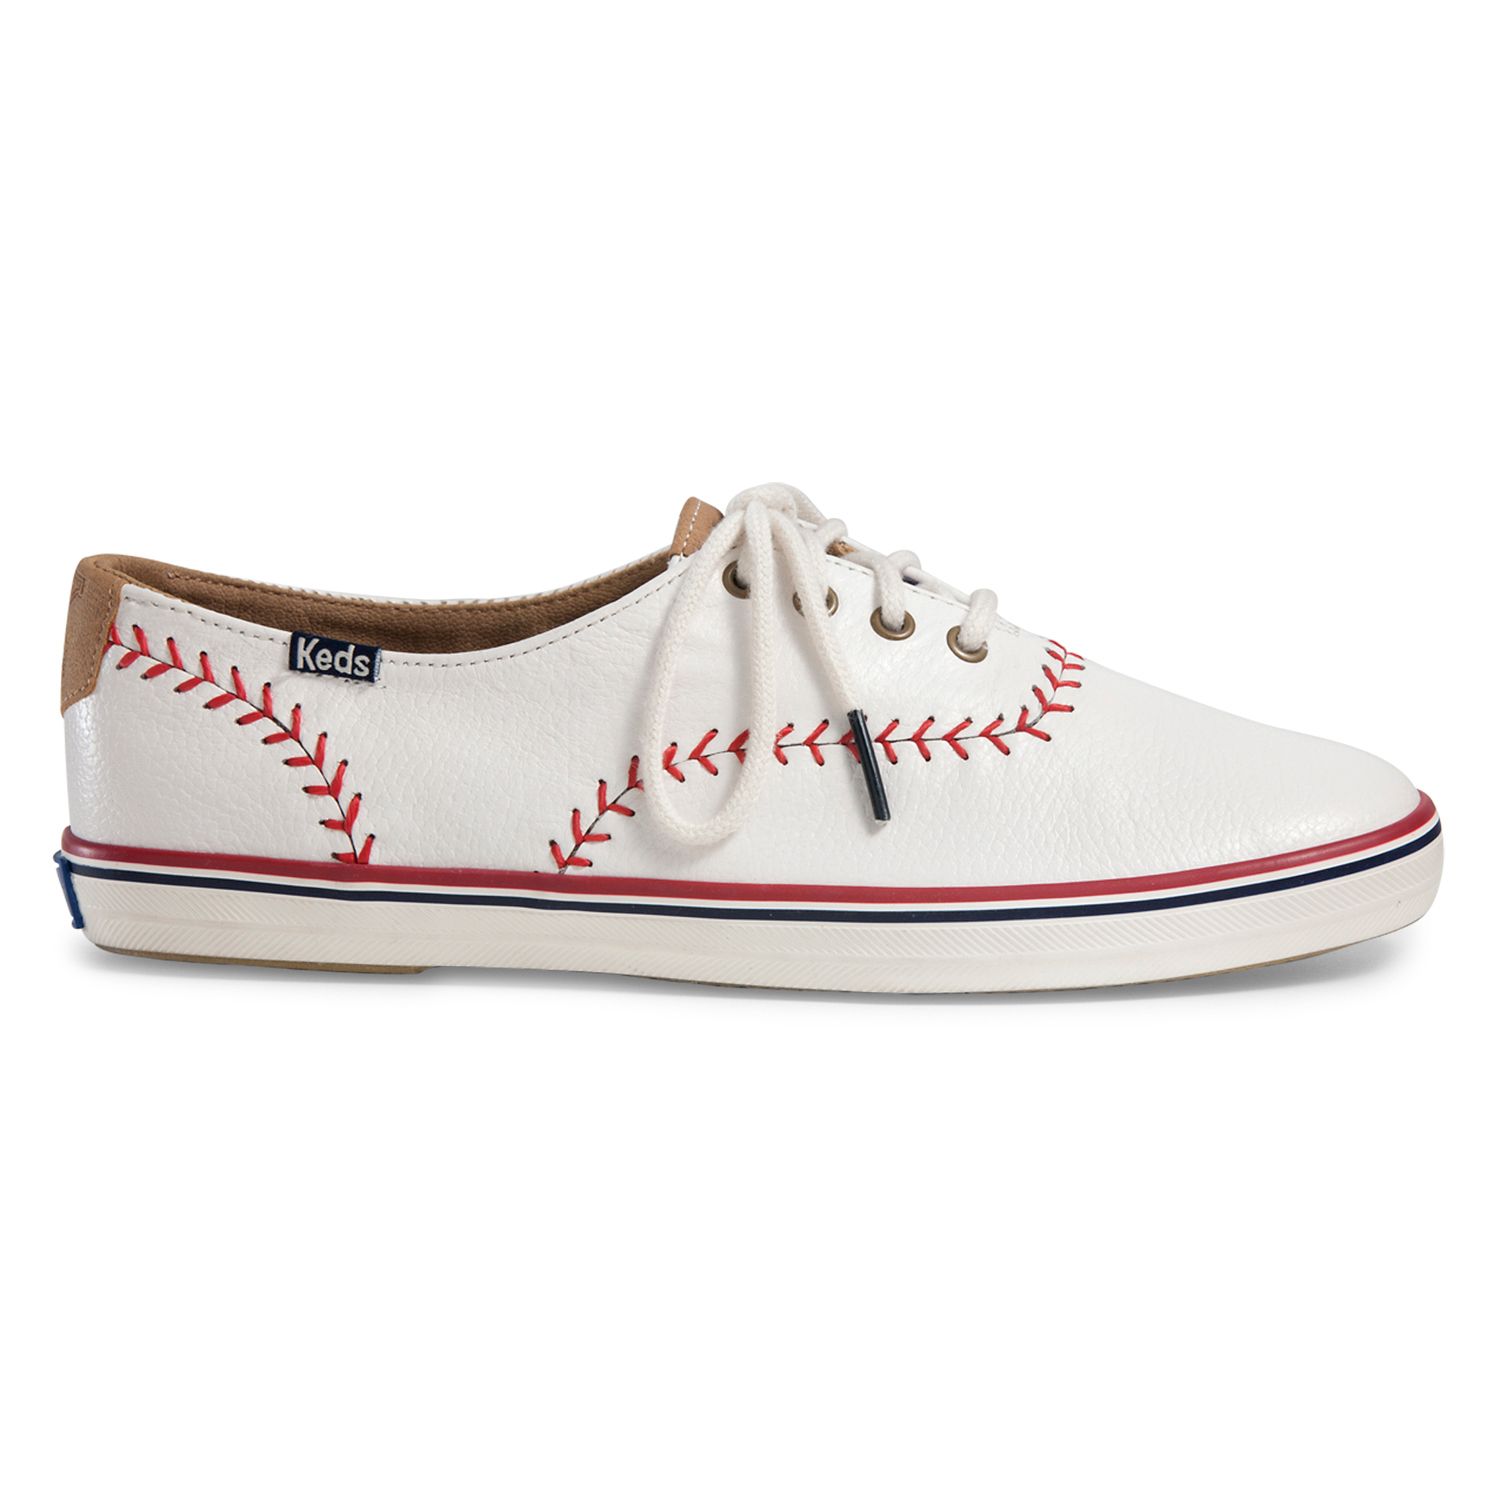 keds leather baseball stitch shoes